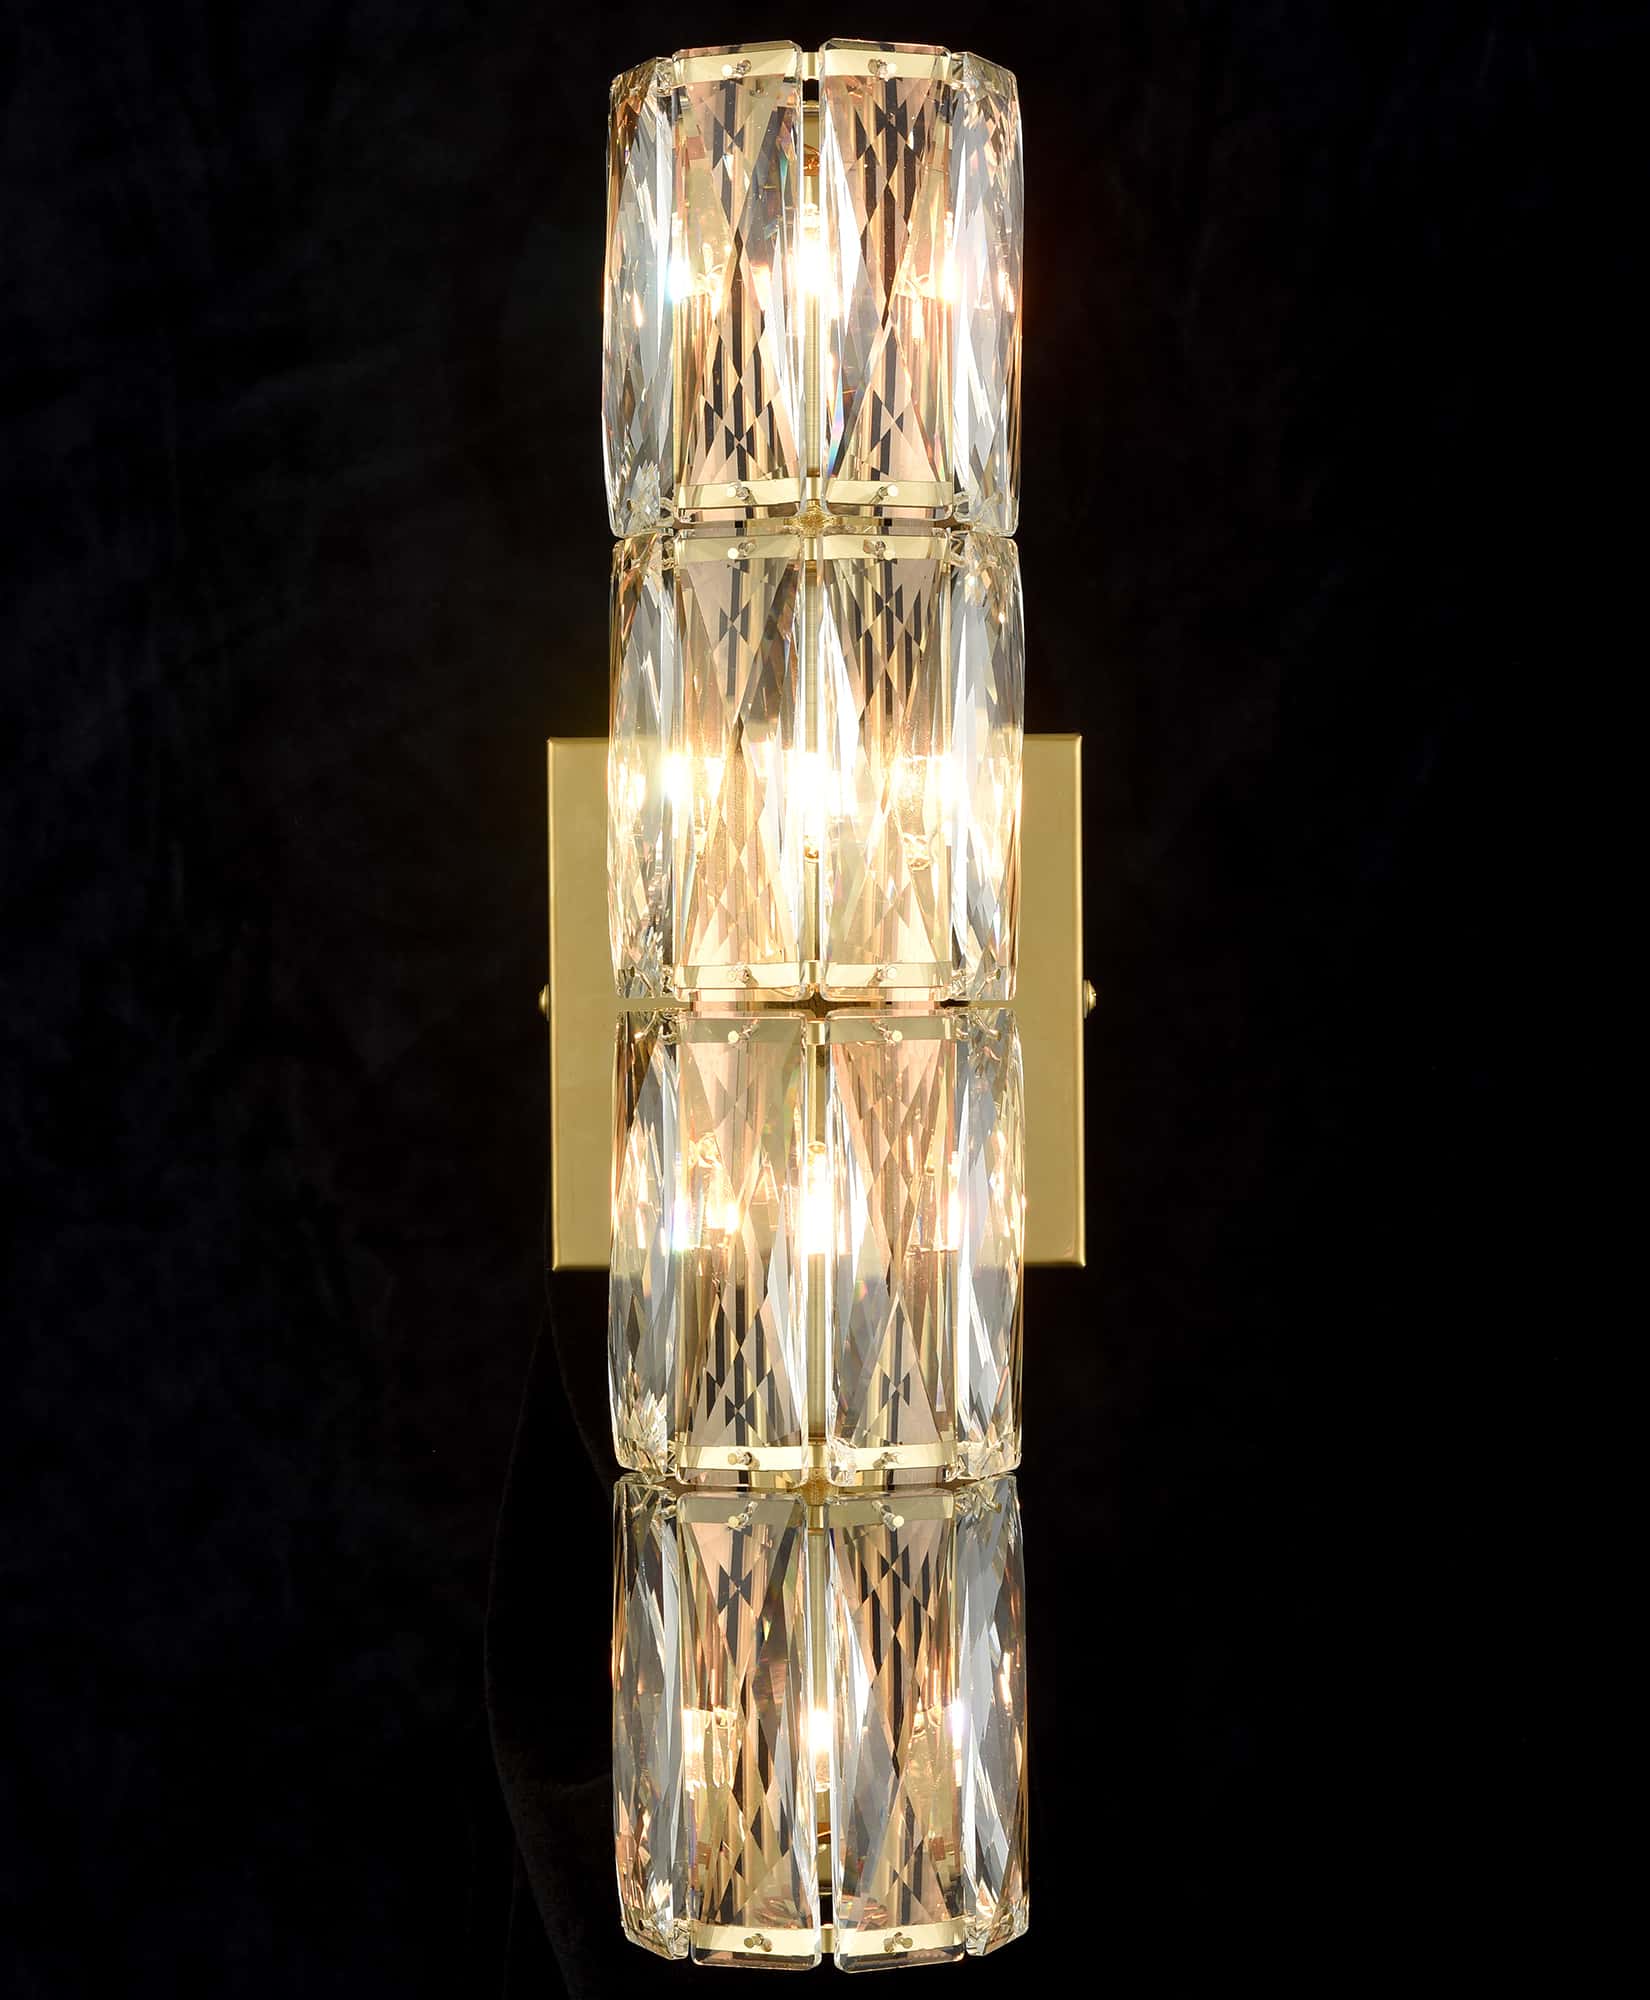 Modern Gold Crystal Wall Sconce 4-Light Bathroom Vanity Light Fixture